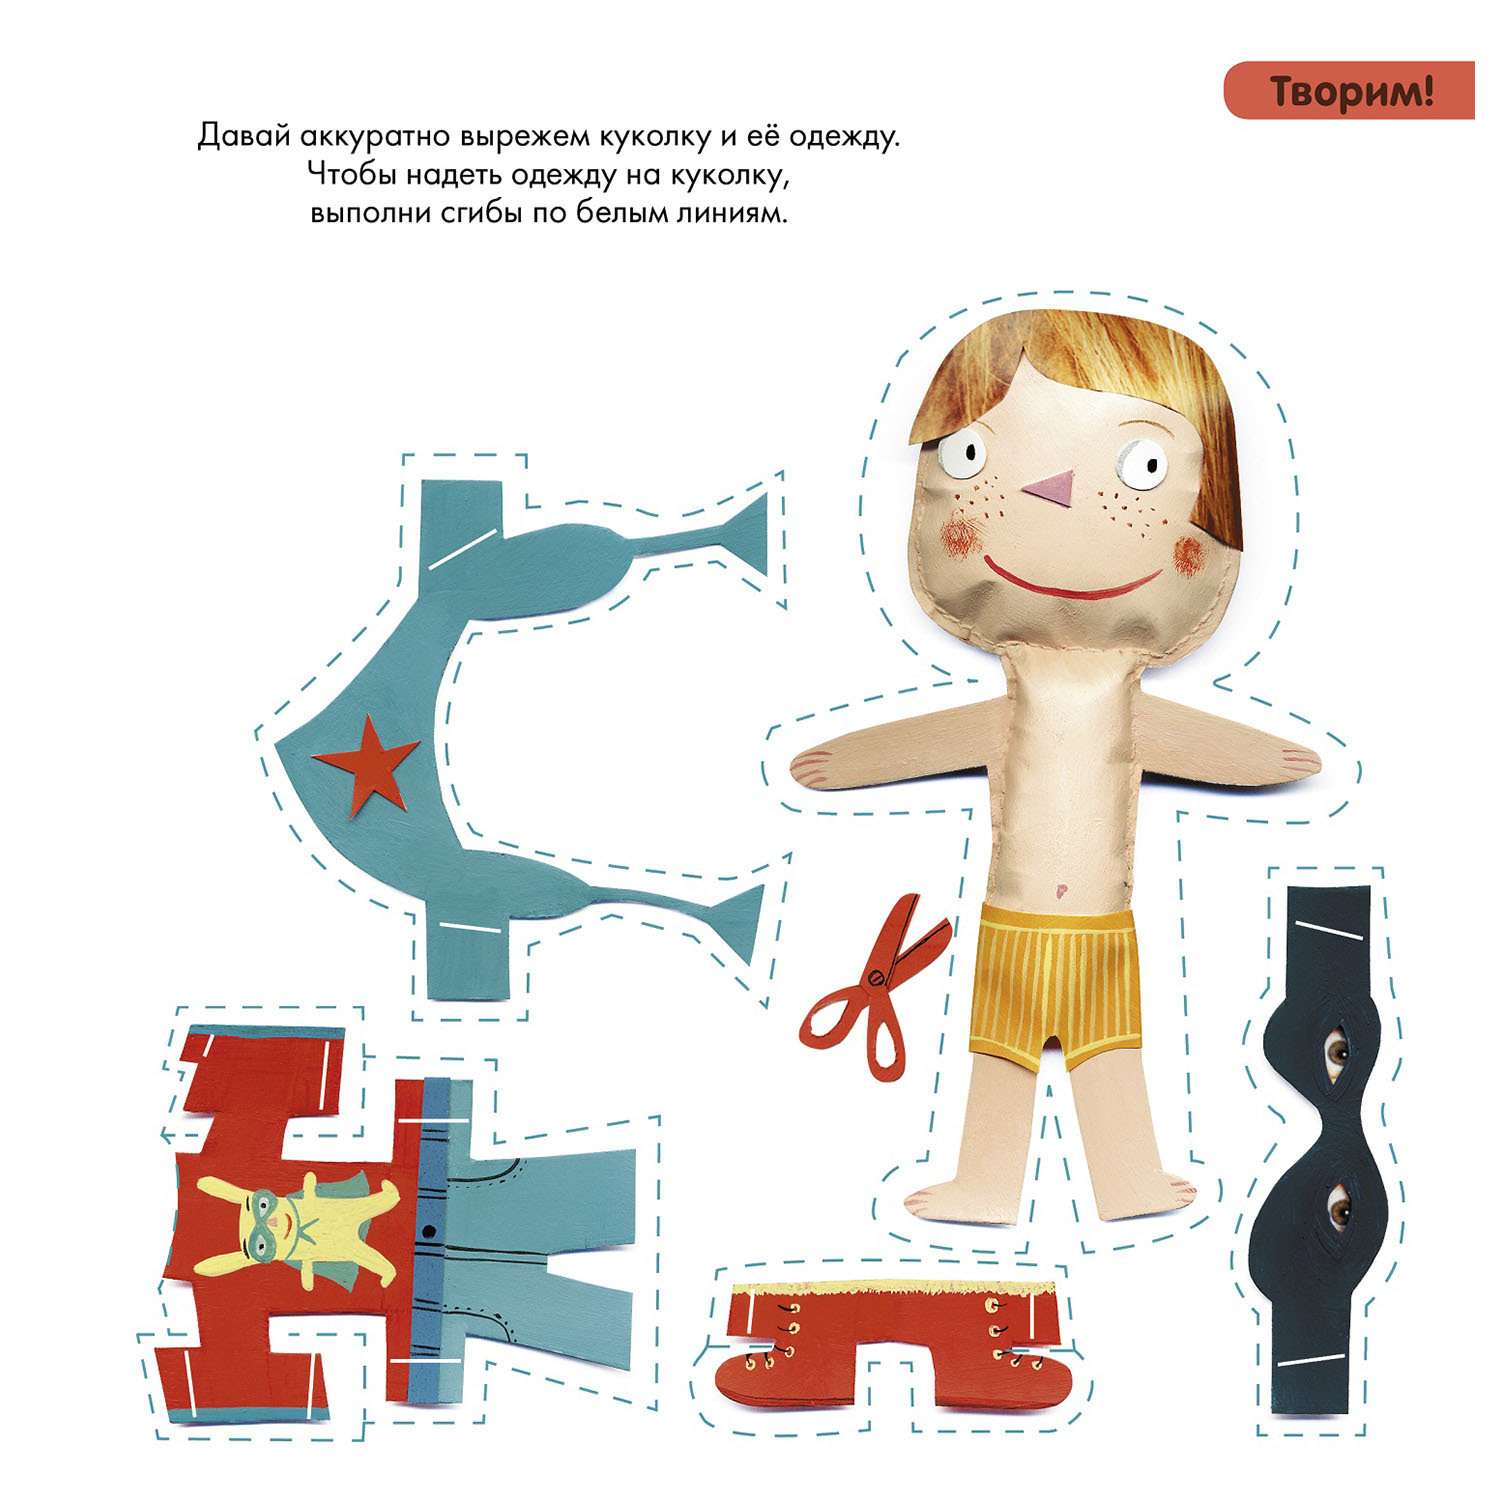 Книга Clever Суперзнатоки 5-6лет Учение-развлечение Блокнот с весёлыми развивающими играми - фото 7